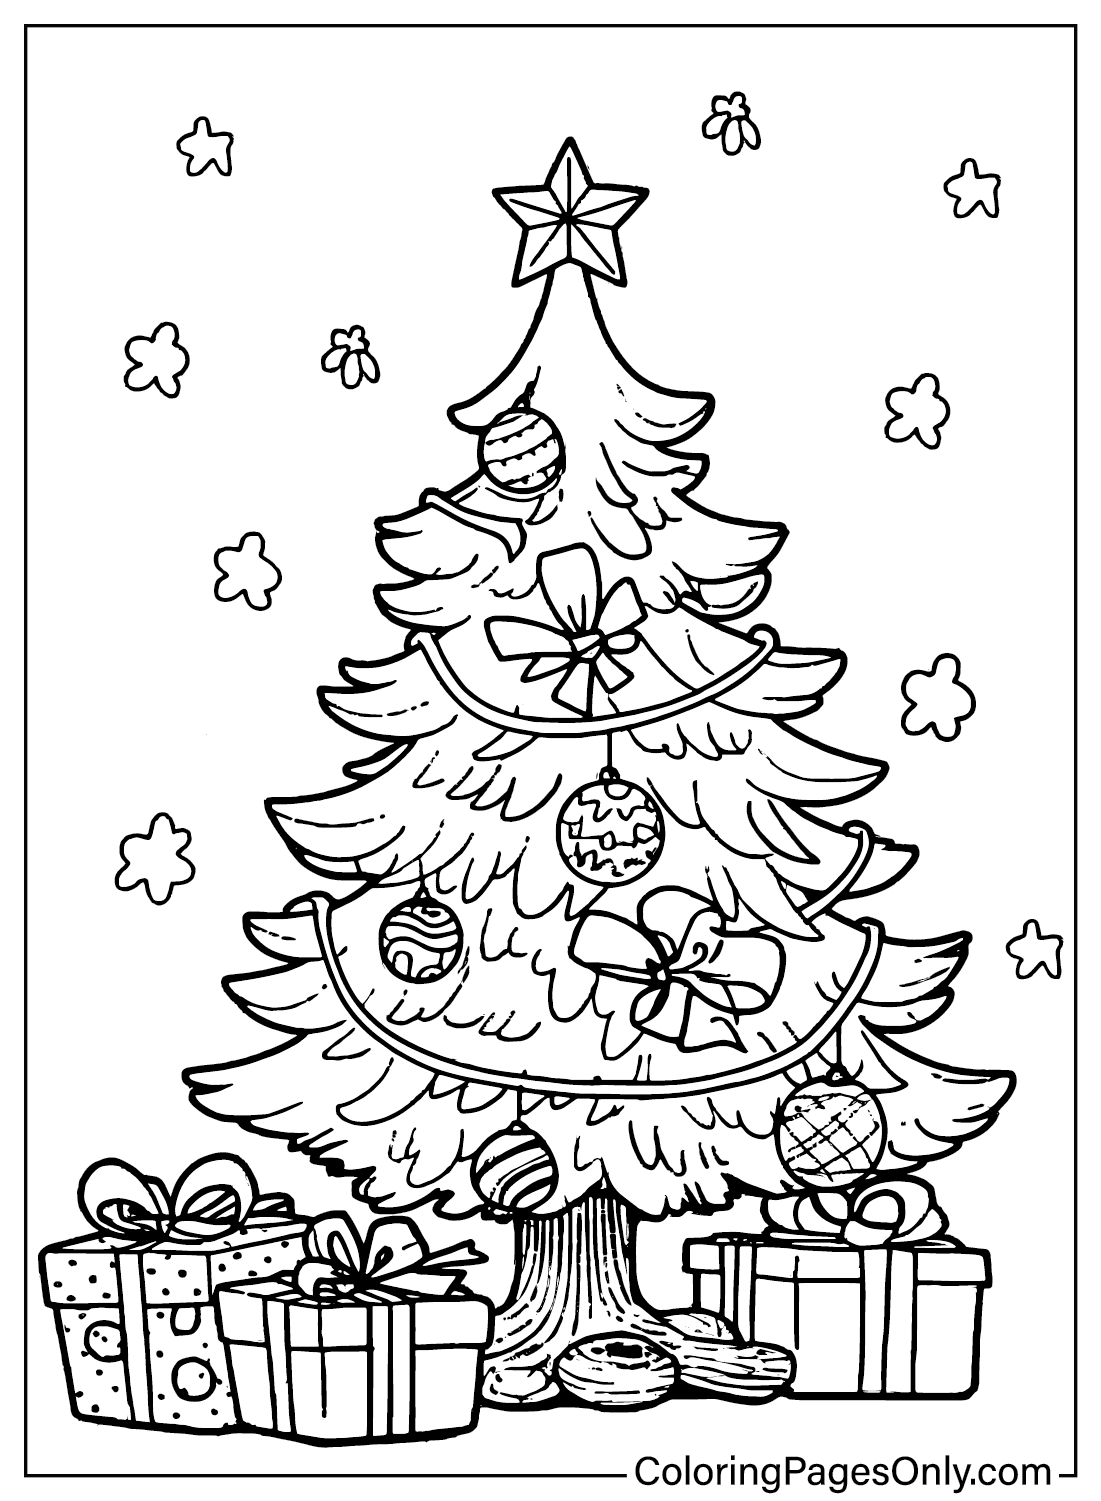 Páginas para colorir da árvore de Natal para imprimir na árvore de Natal